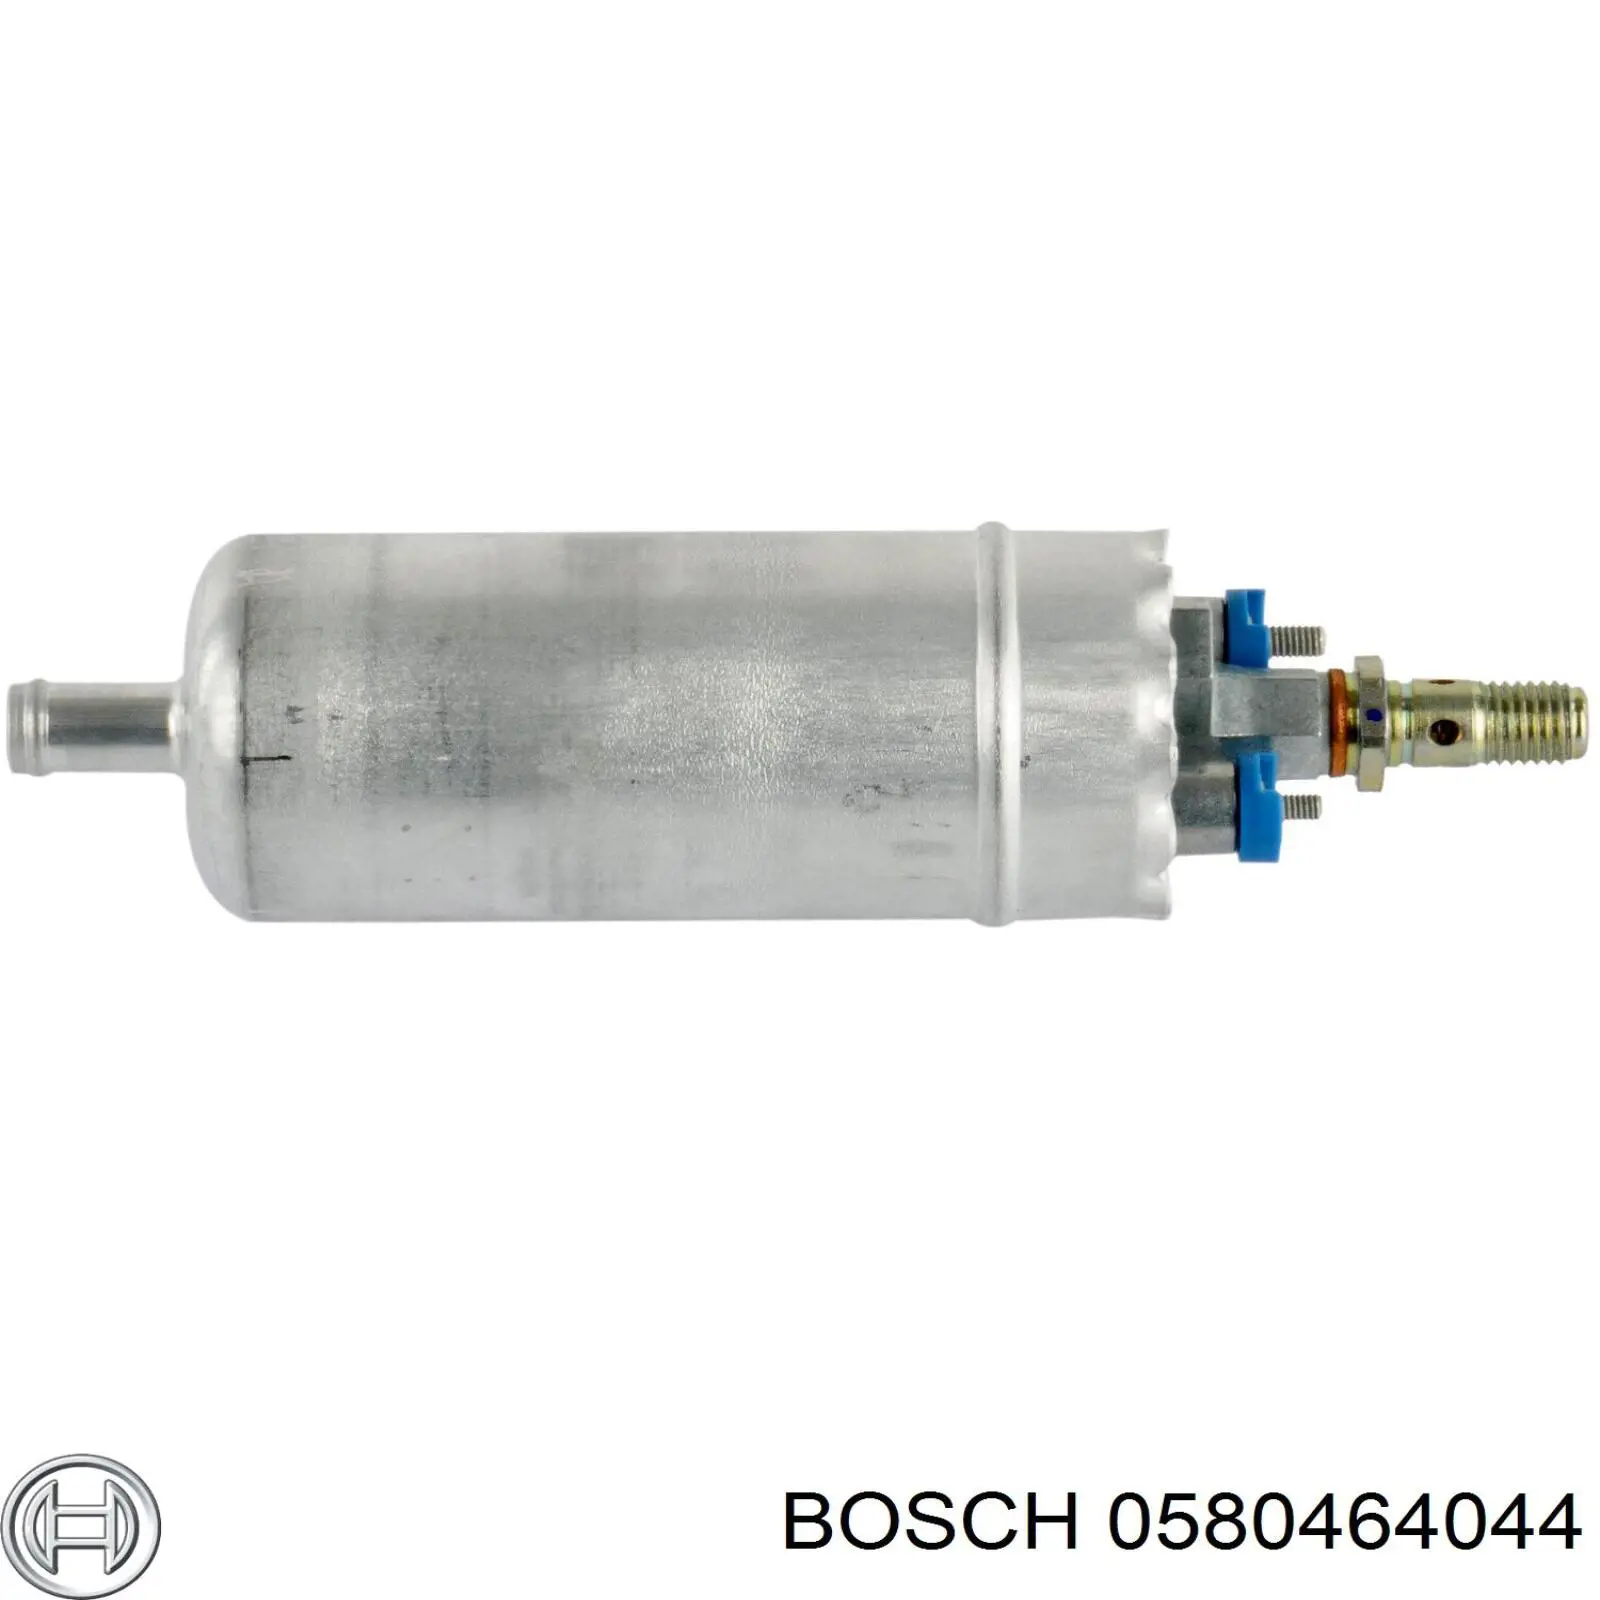 0580464044 Bosch bomba de combustible principal